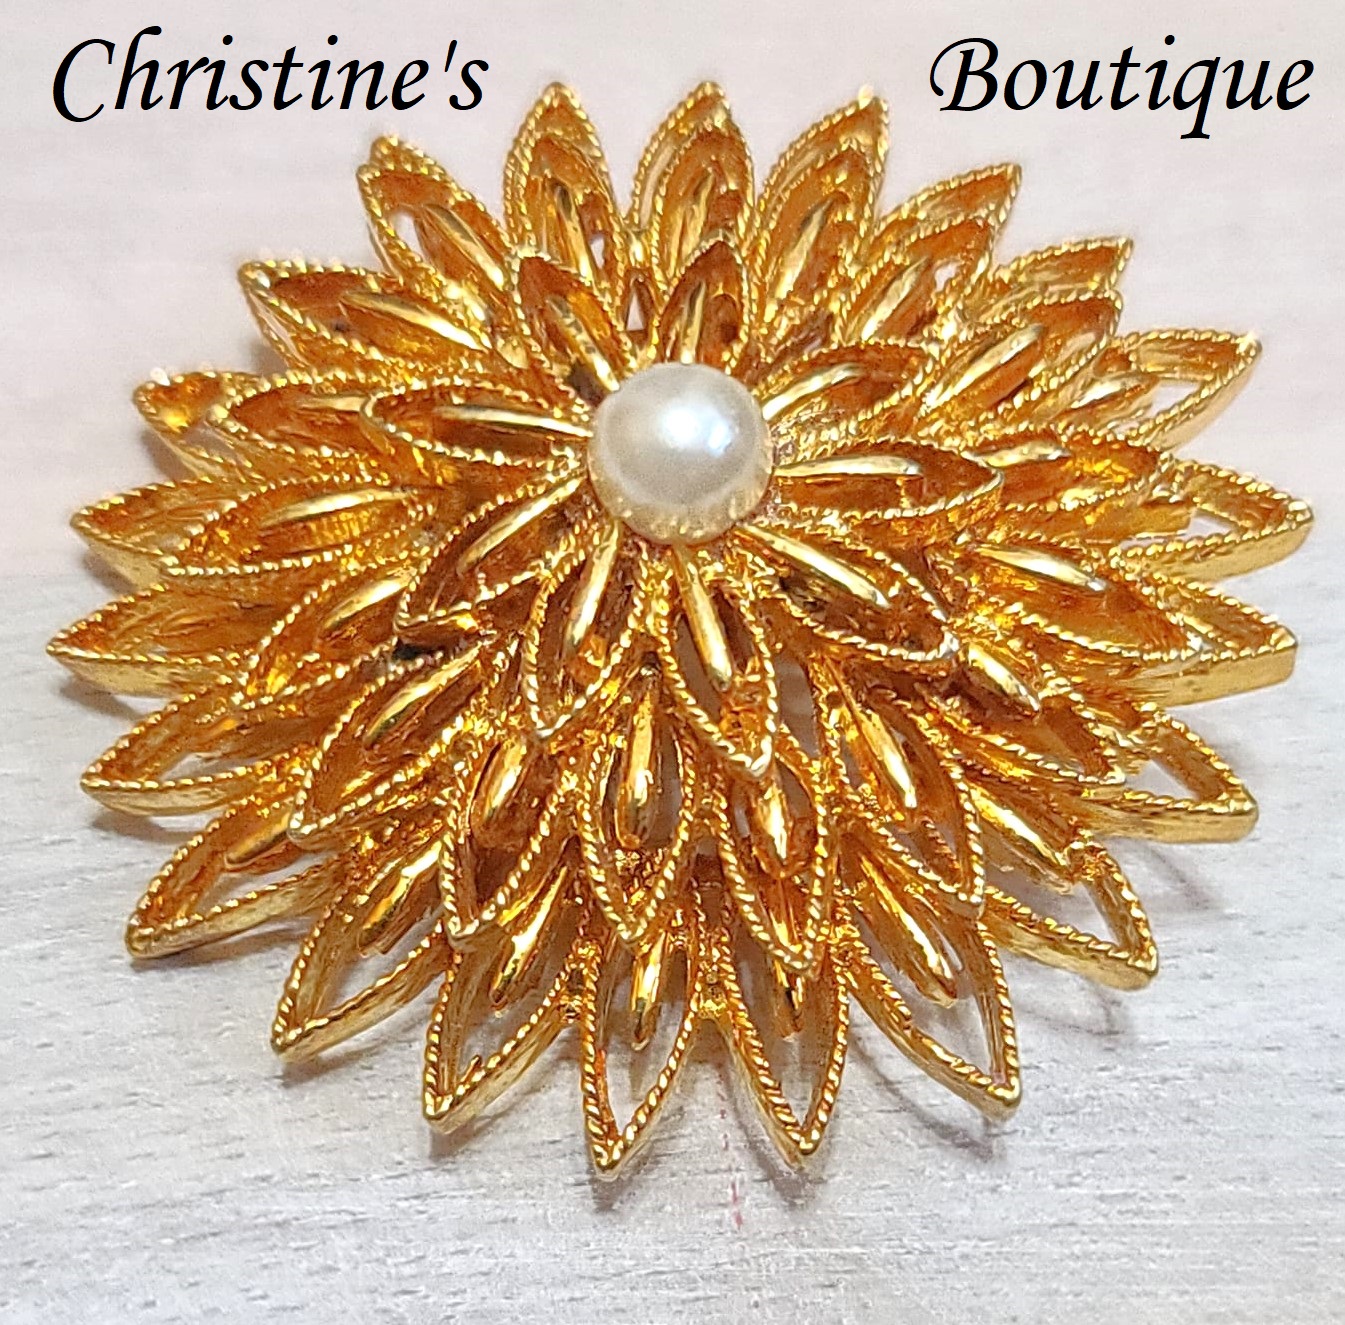 Vintage sunburst pin, brooch, goldtone with pearl center